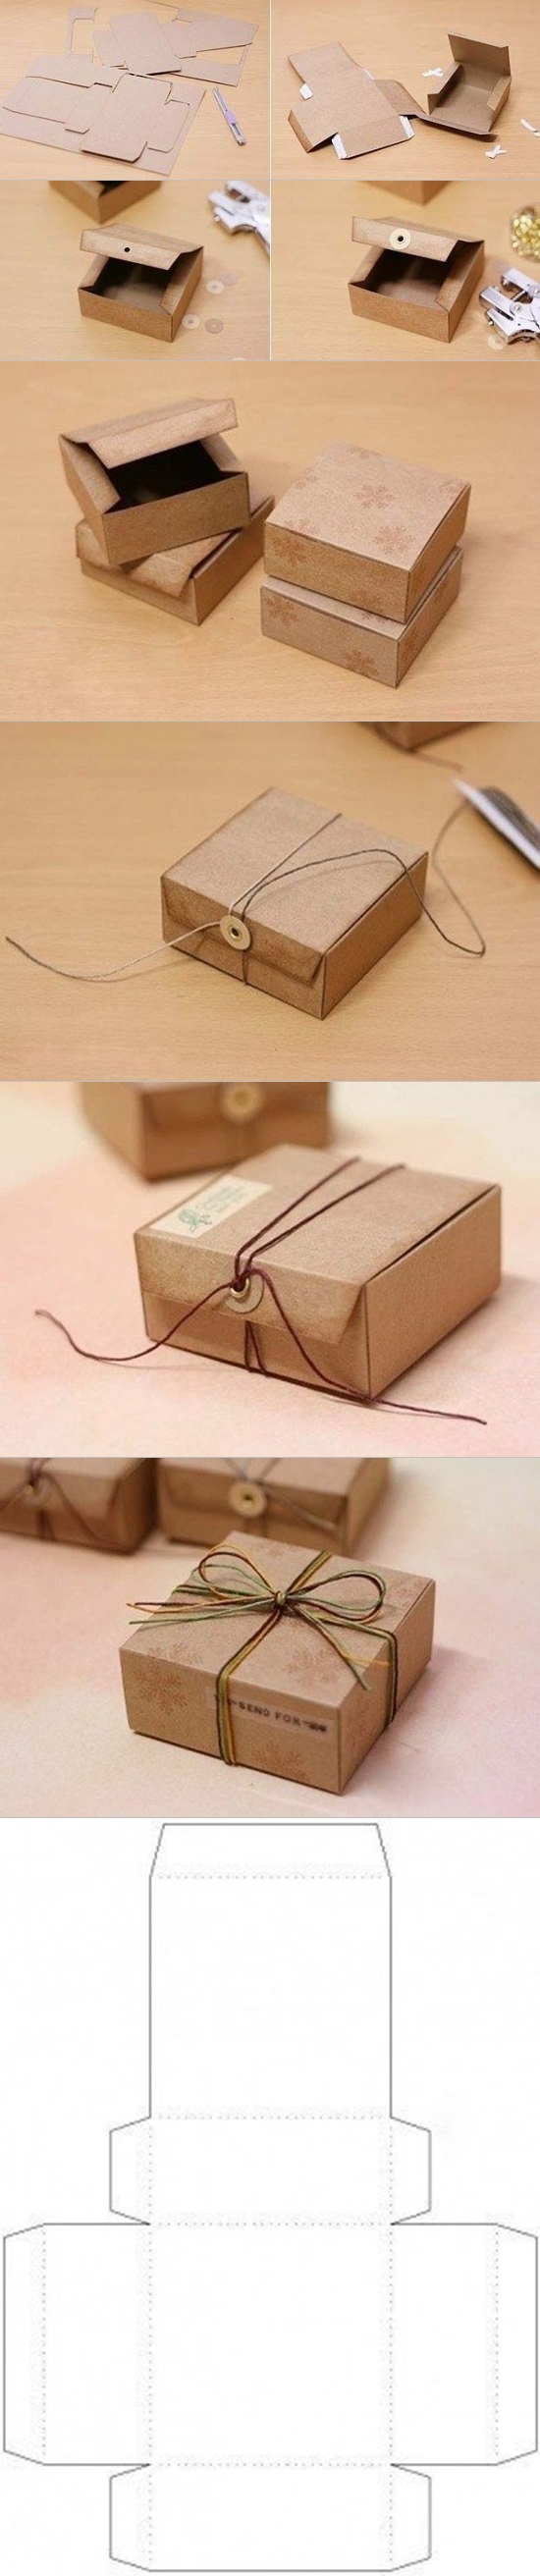 DIY Gift Box from Cardboard - DIY Tutorials